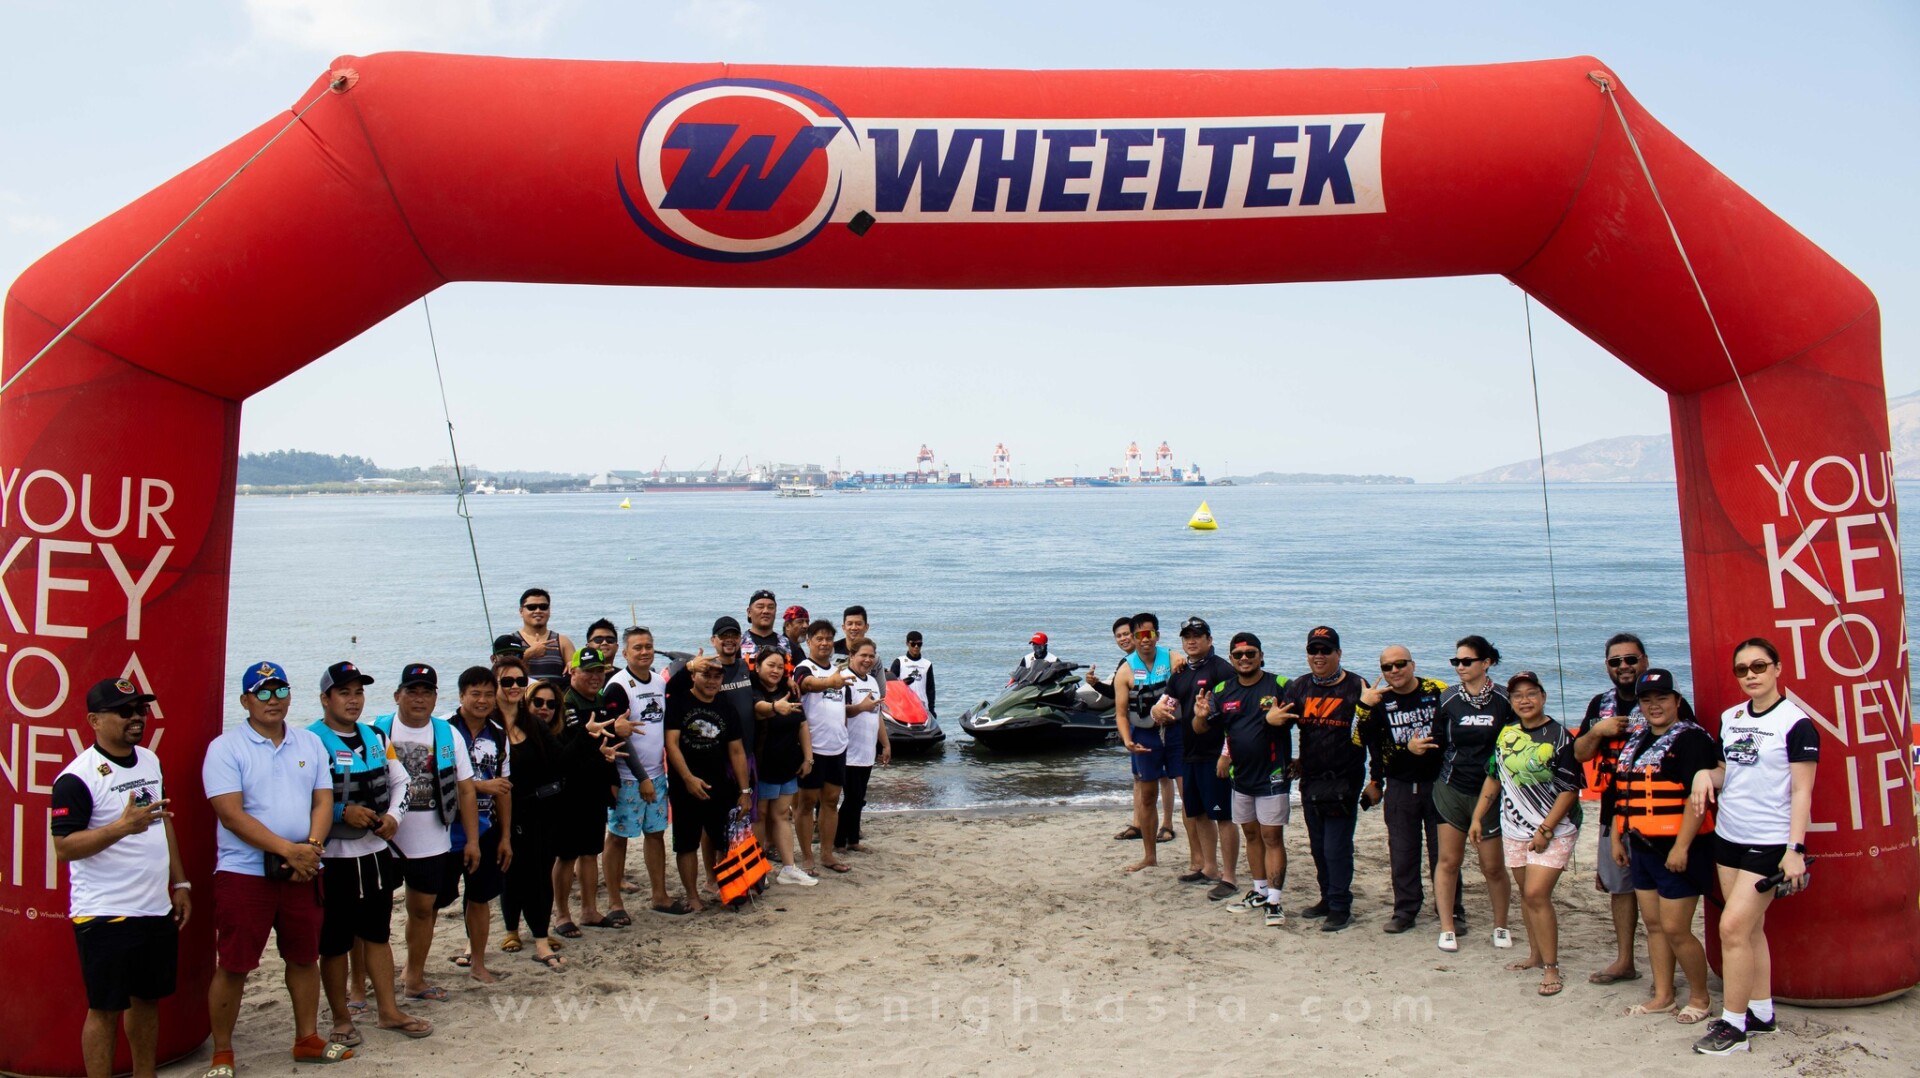 Experience Supercharged: Wheeltek's Jet Ski Test Ride Event